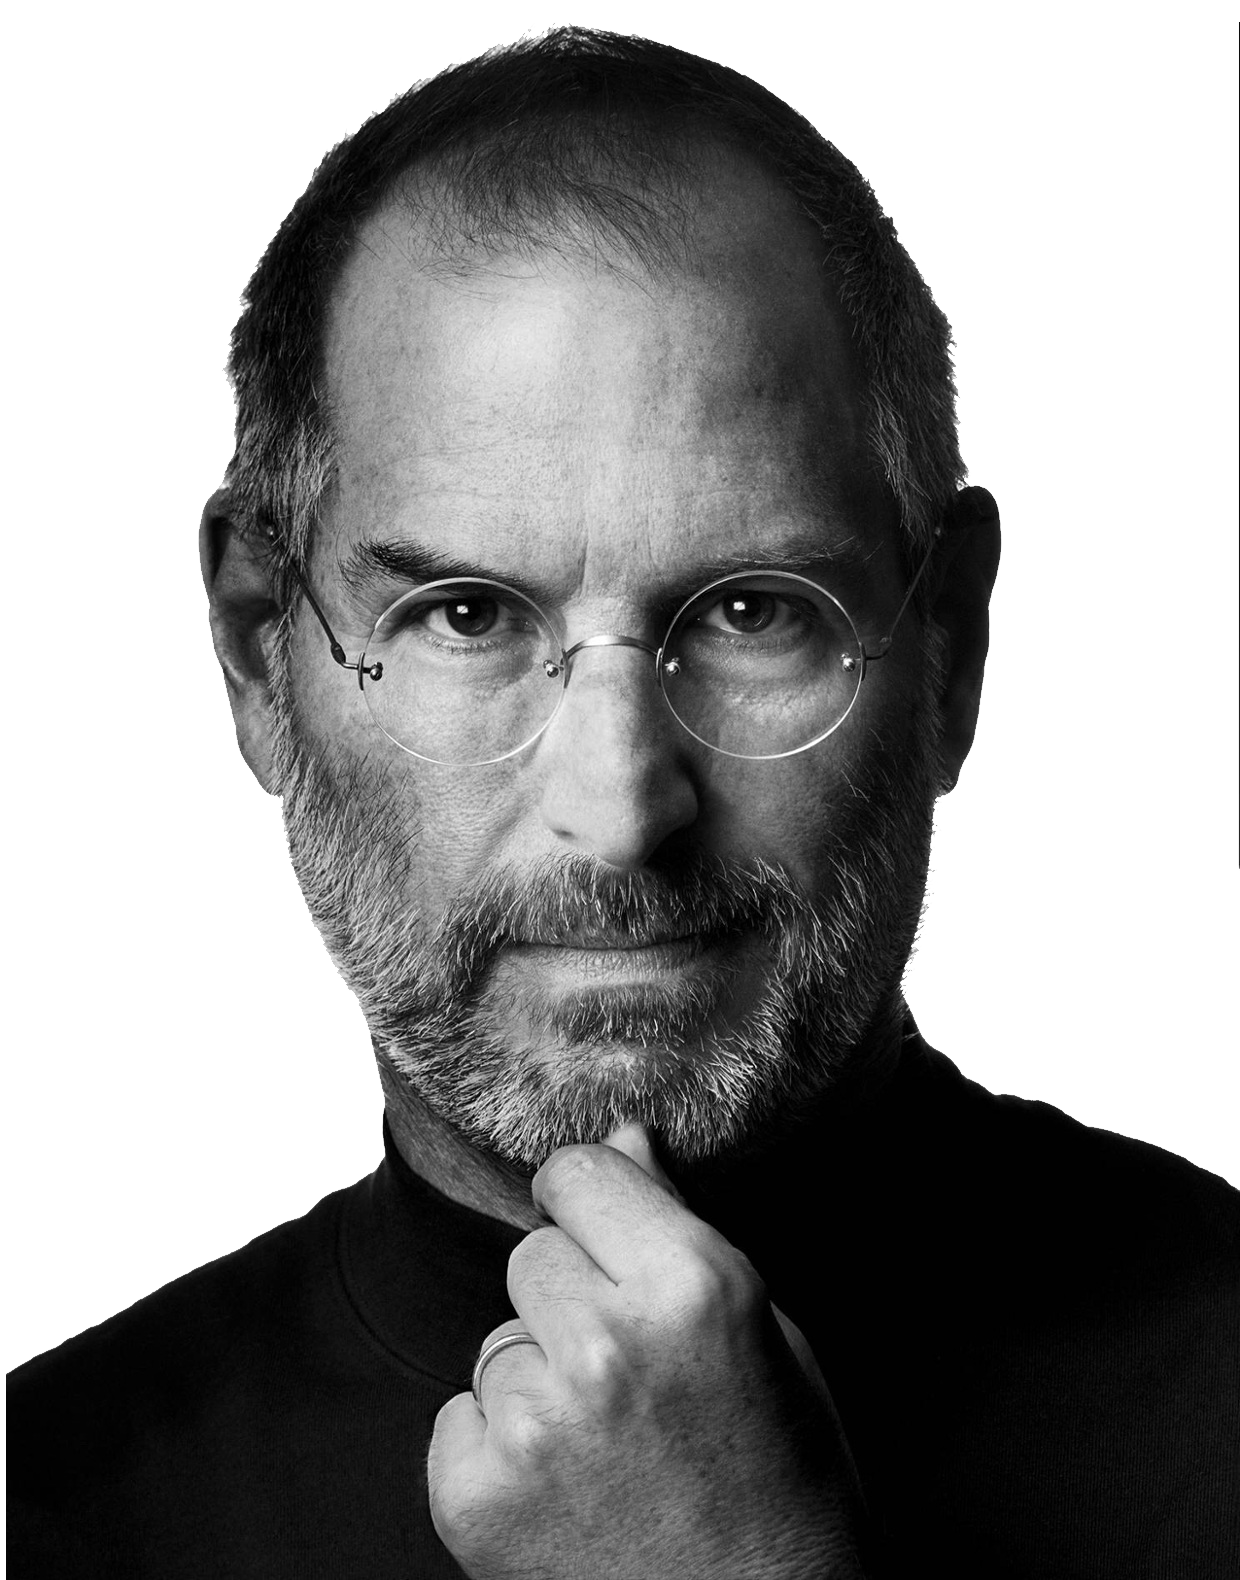 Steve Jobs transparente